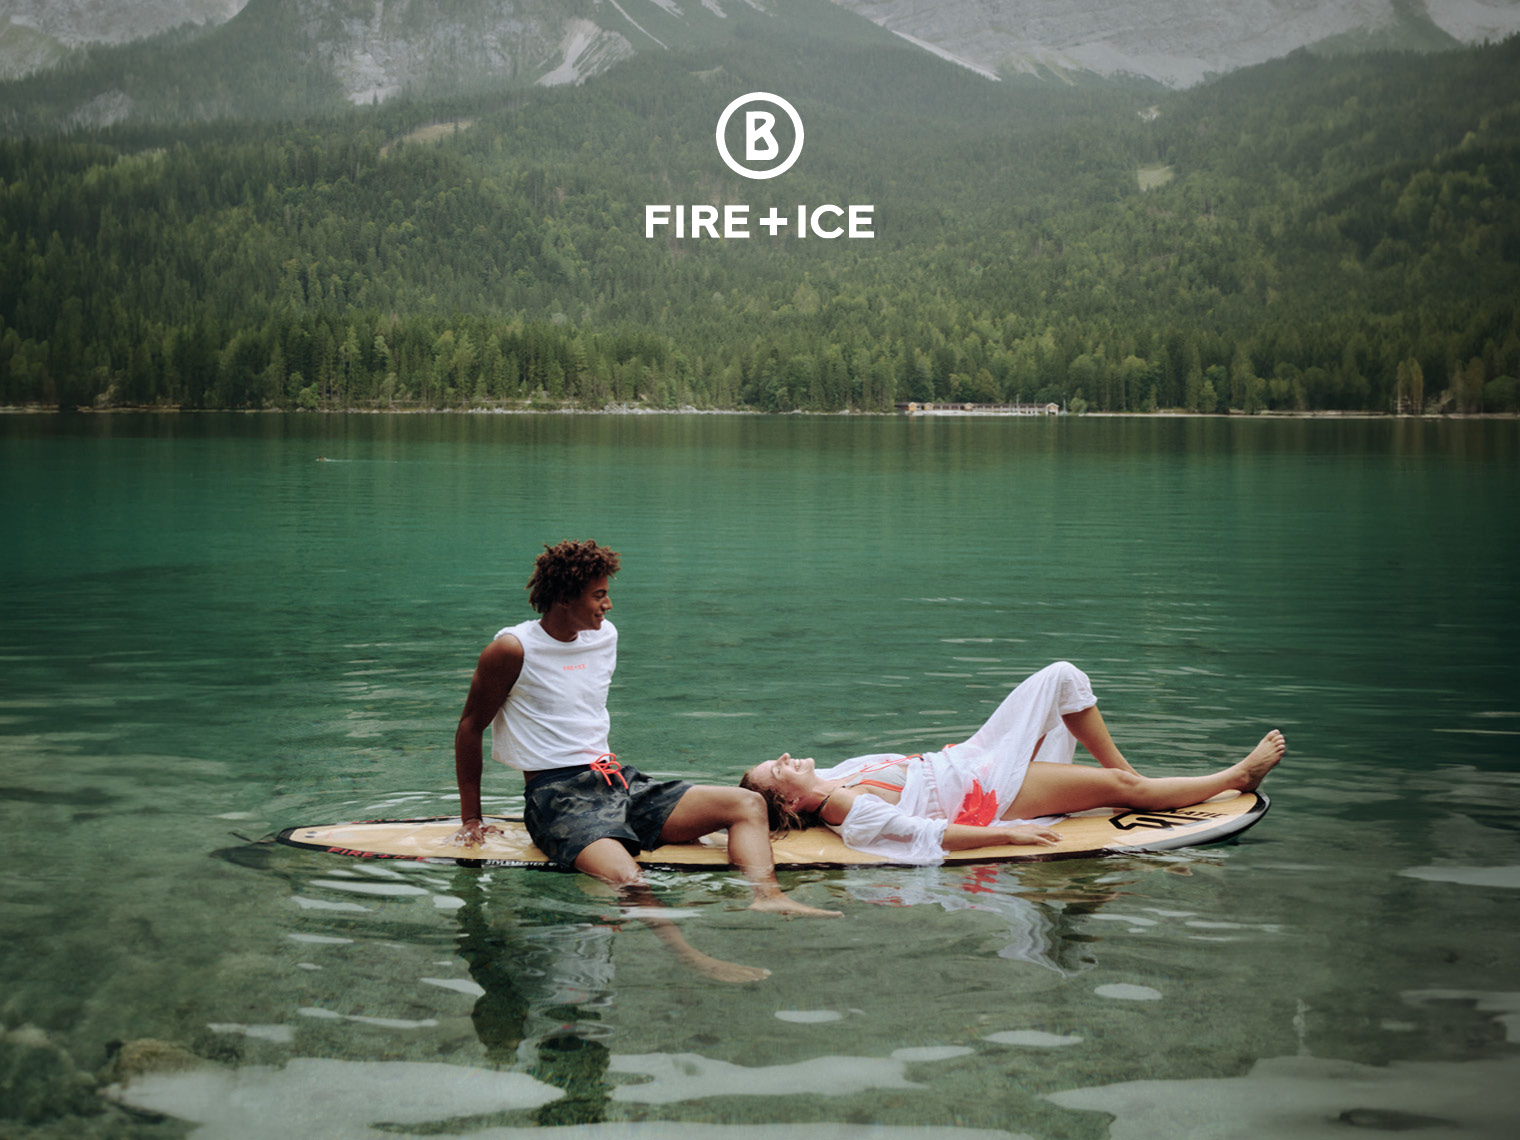 Fire + Ice Brandshop